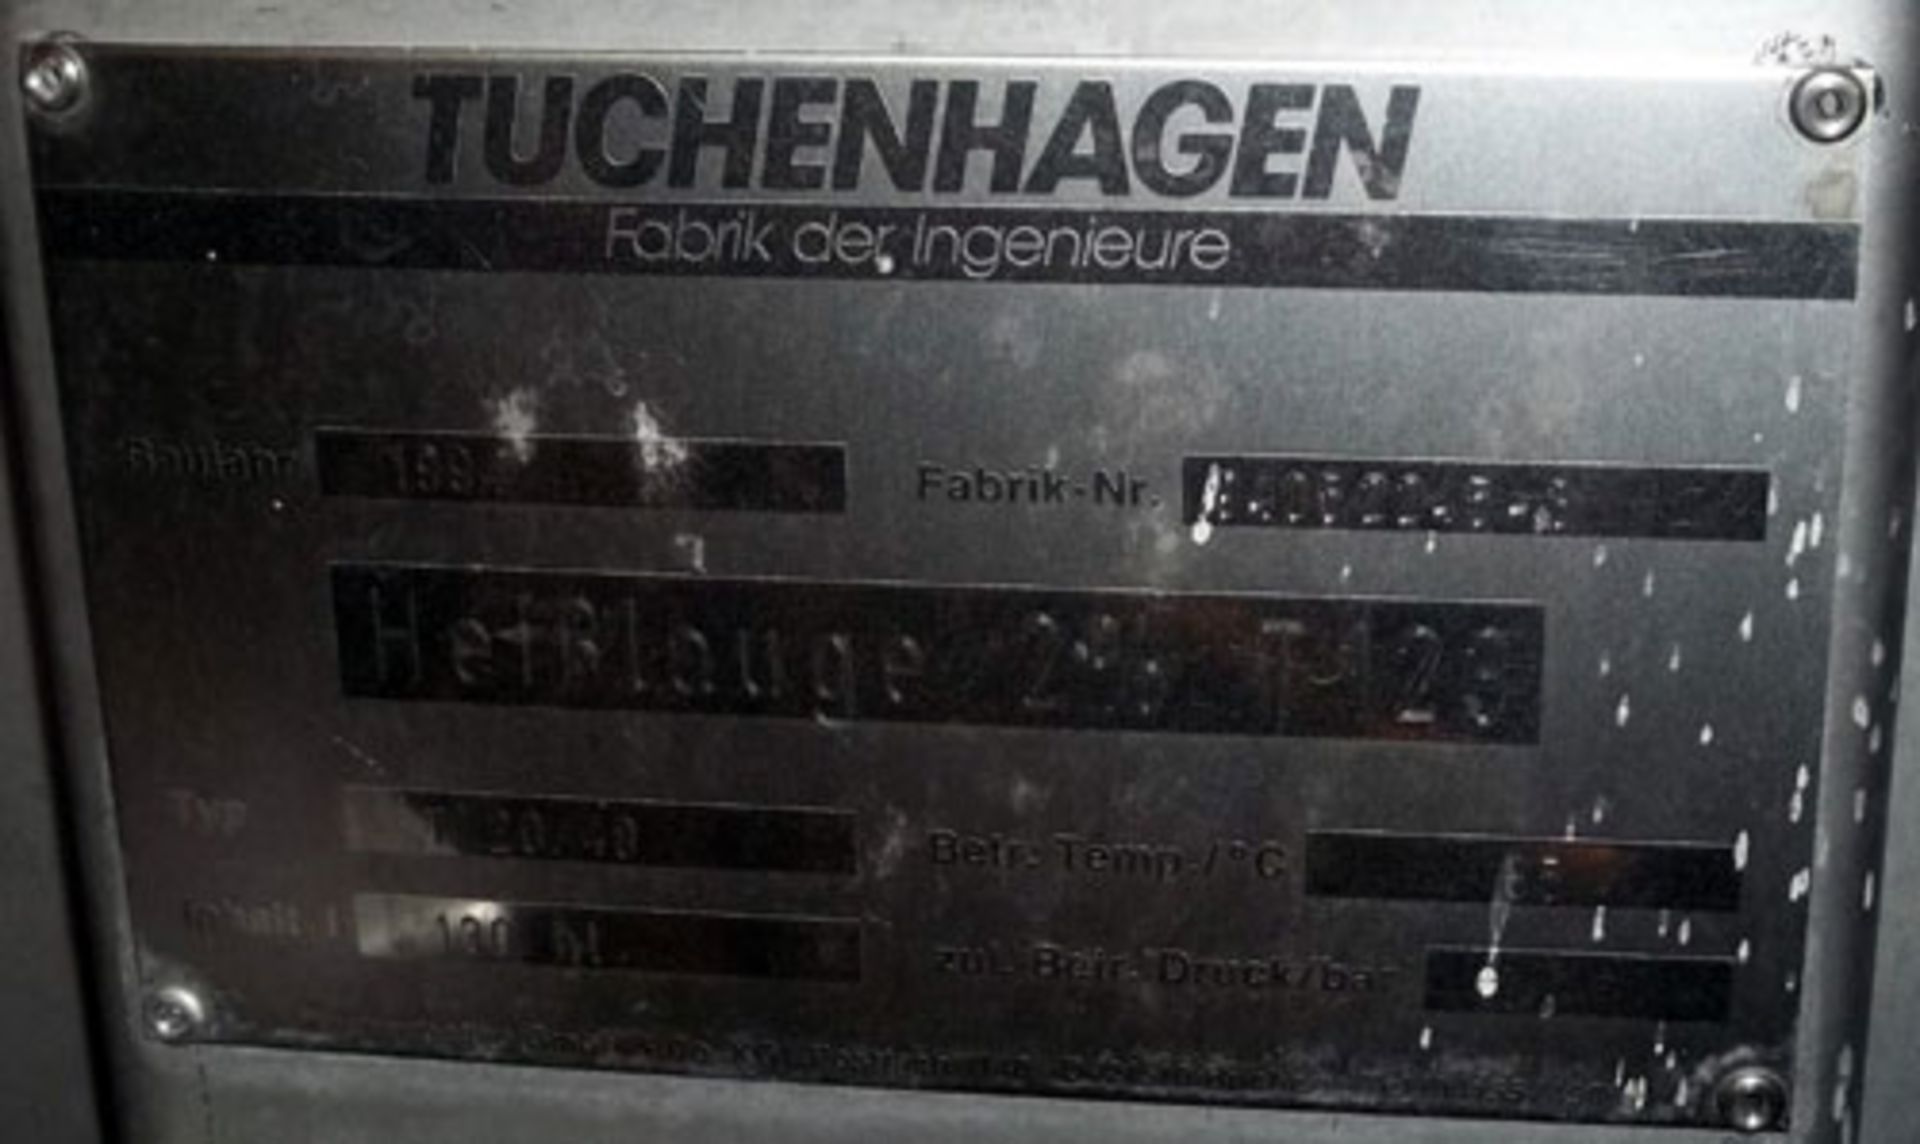 Tuchenhagen Tank, 130 Hectoliter (3434 Gallon), Type T20/40, Stainless Steel, Vertical. Rated 1 - Image 6 of 6